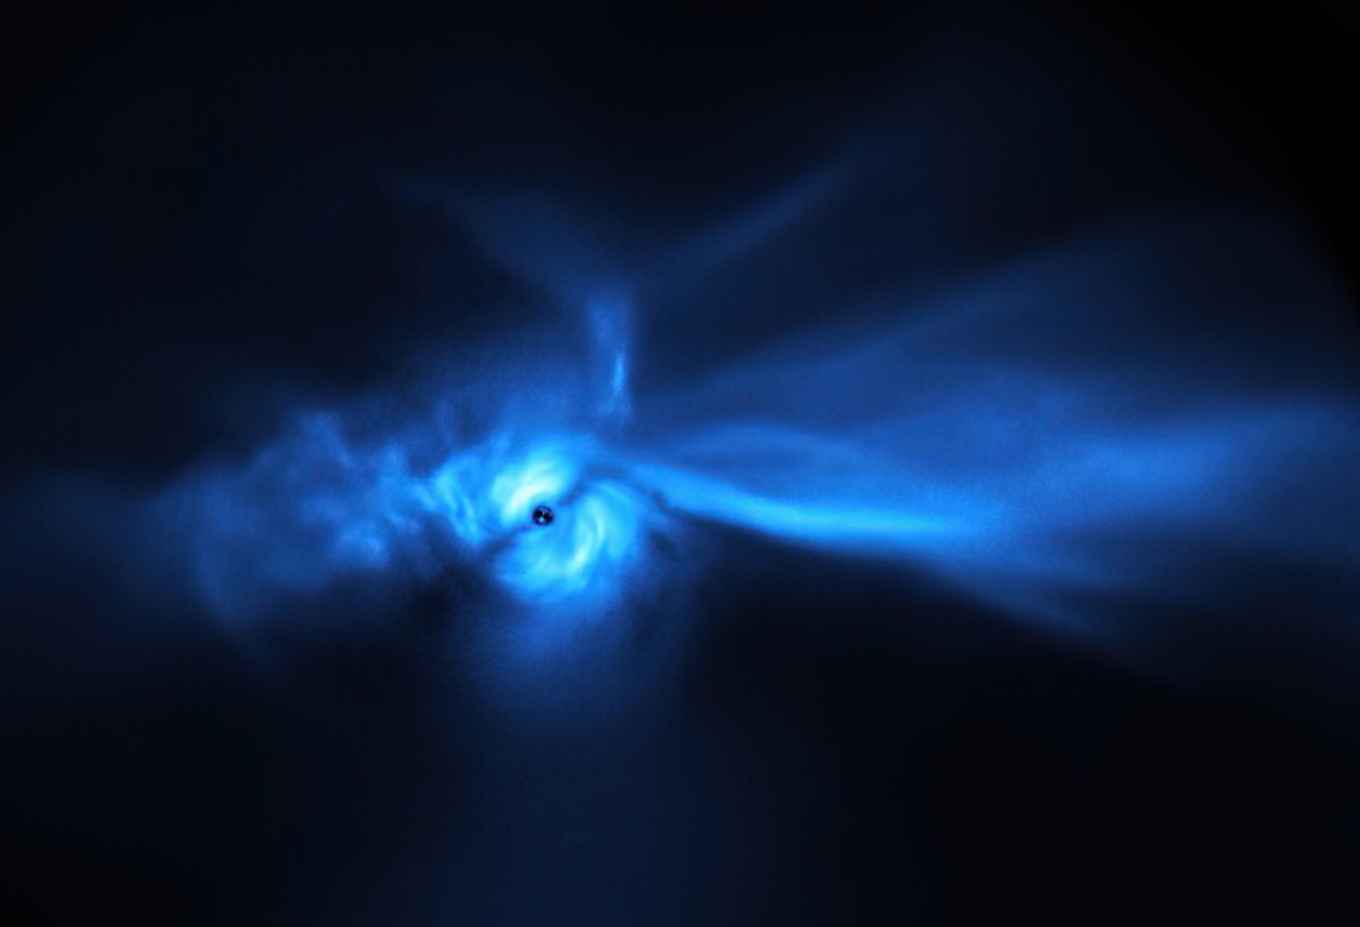 A blue irregular nebula (resembling a bird) around a star-forming disk